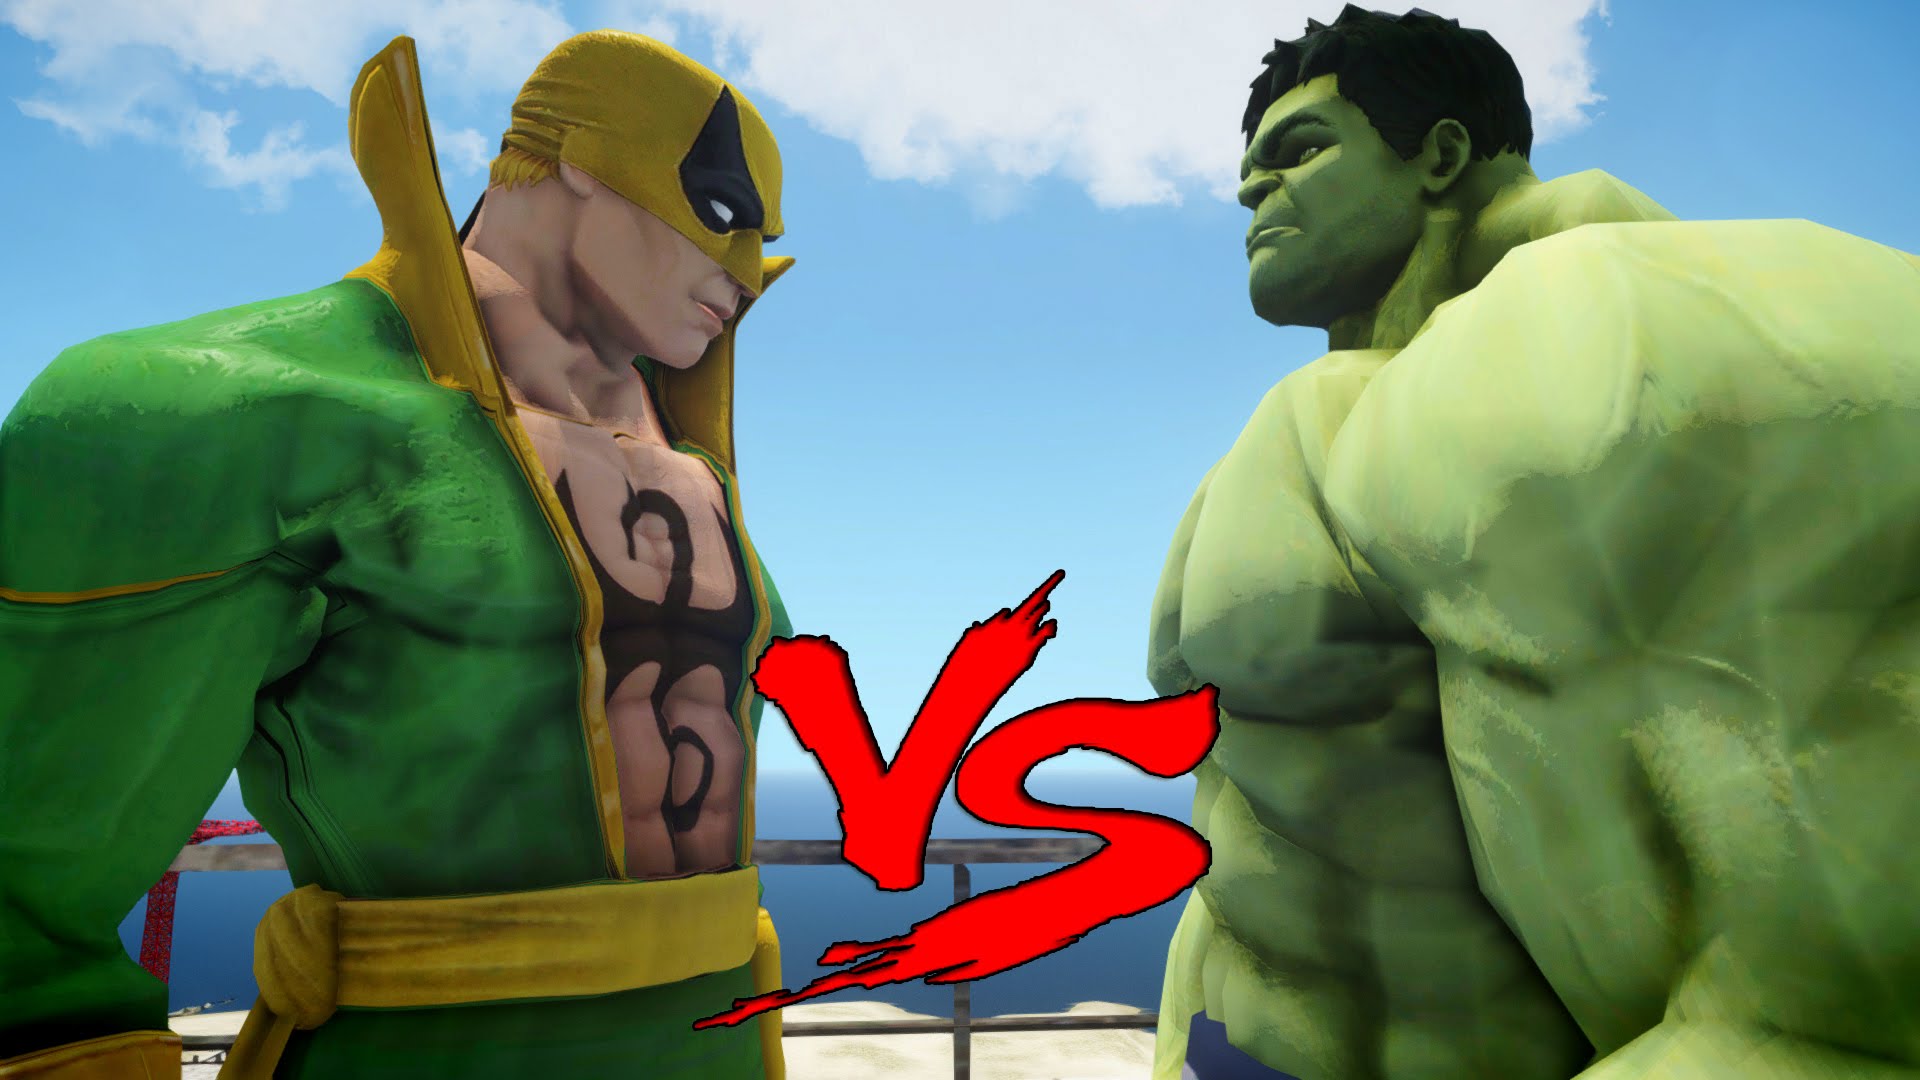 Iron Fist vs The Hulk